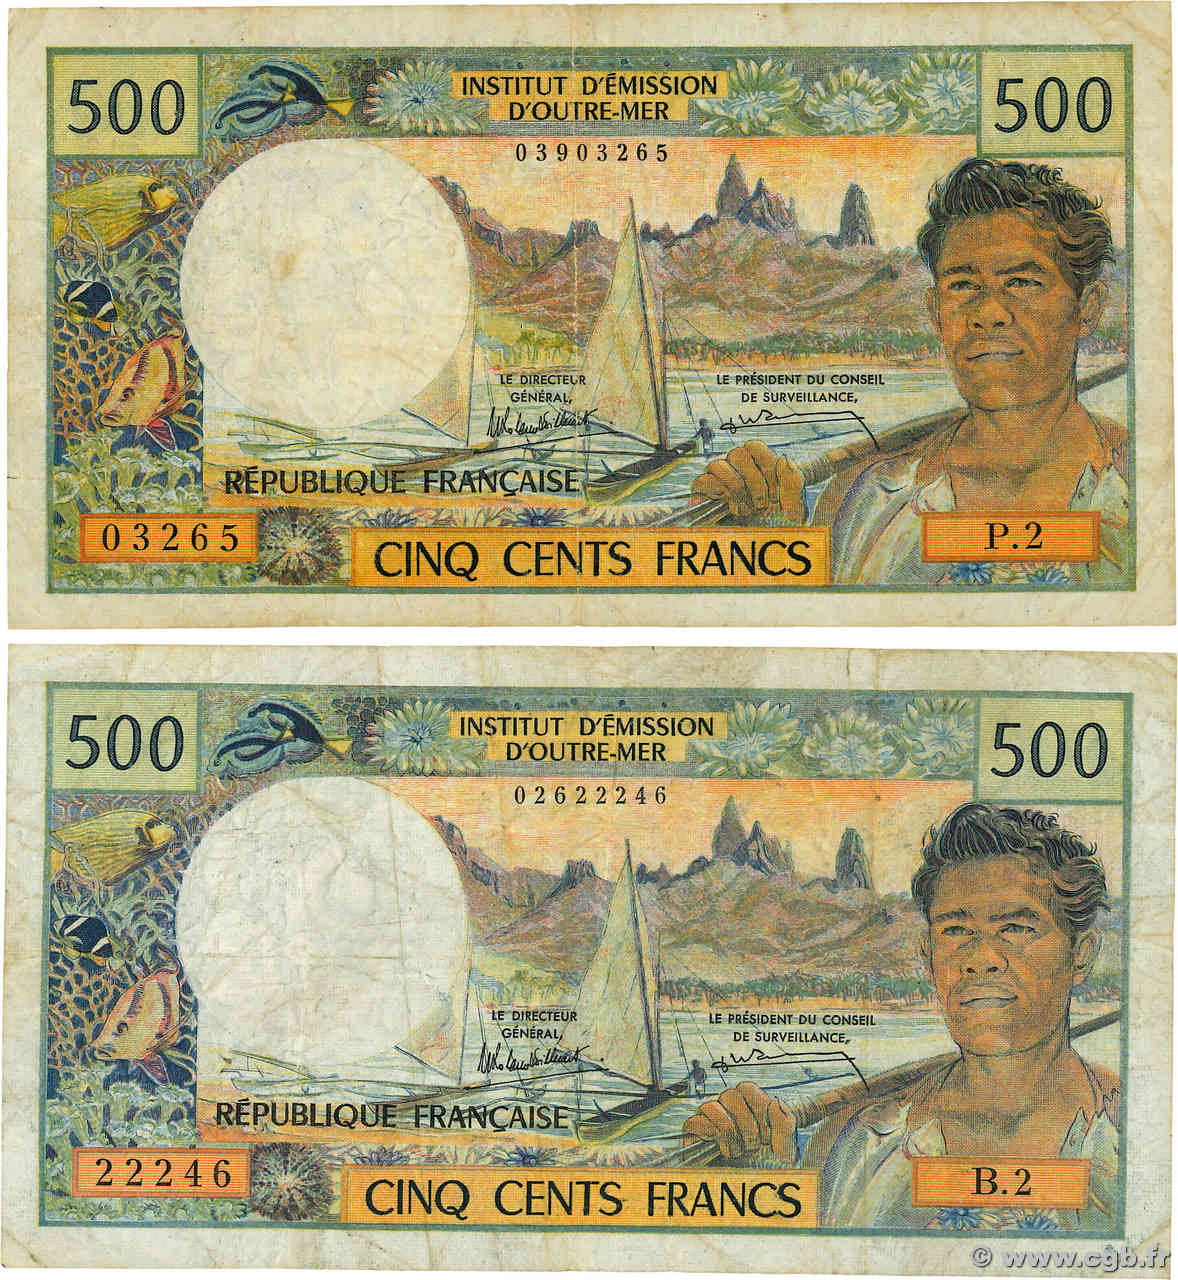 500 Francs Lot NEW CALEDONIA  1990 P.60e VG